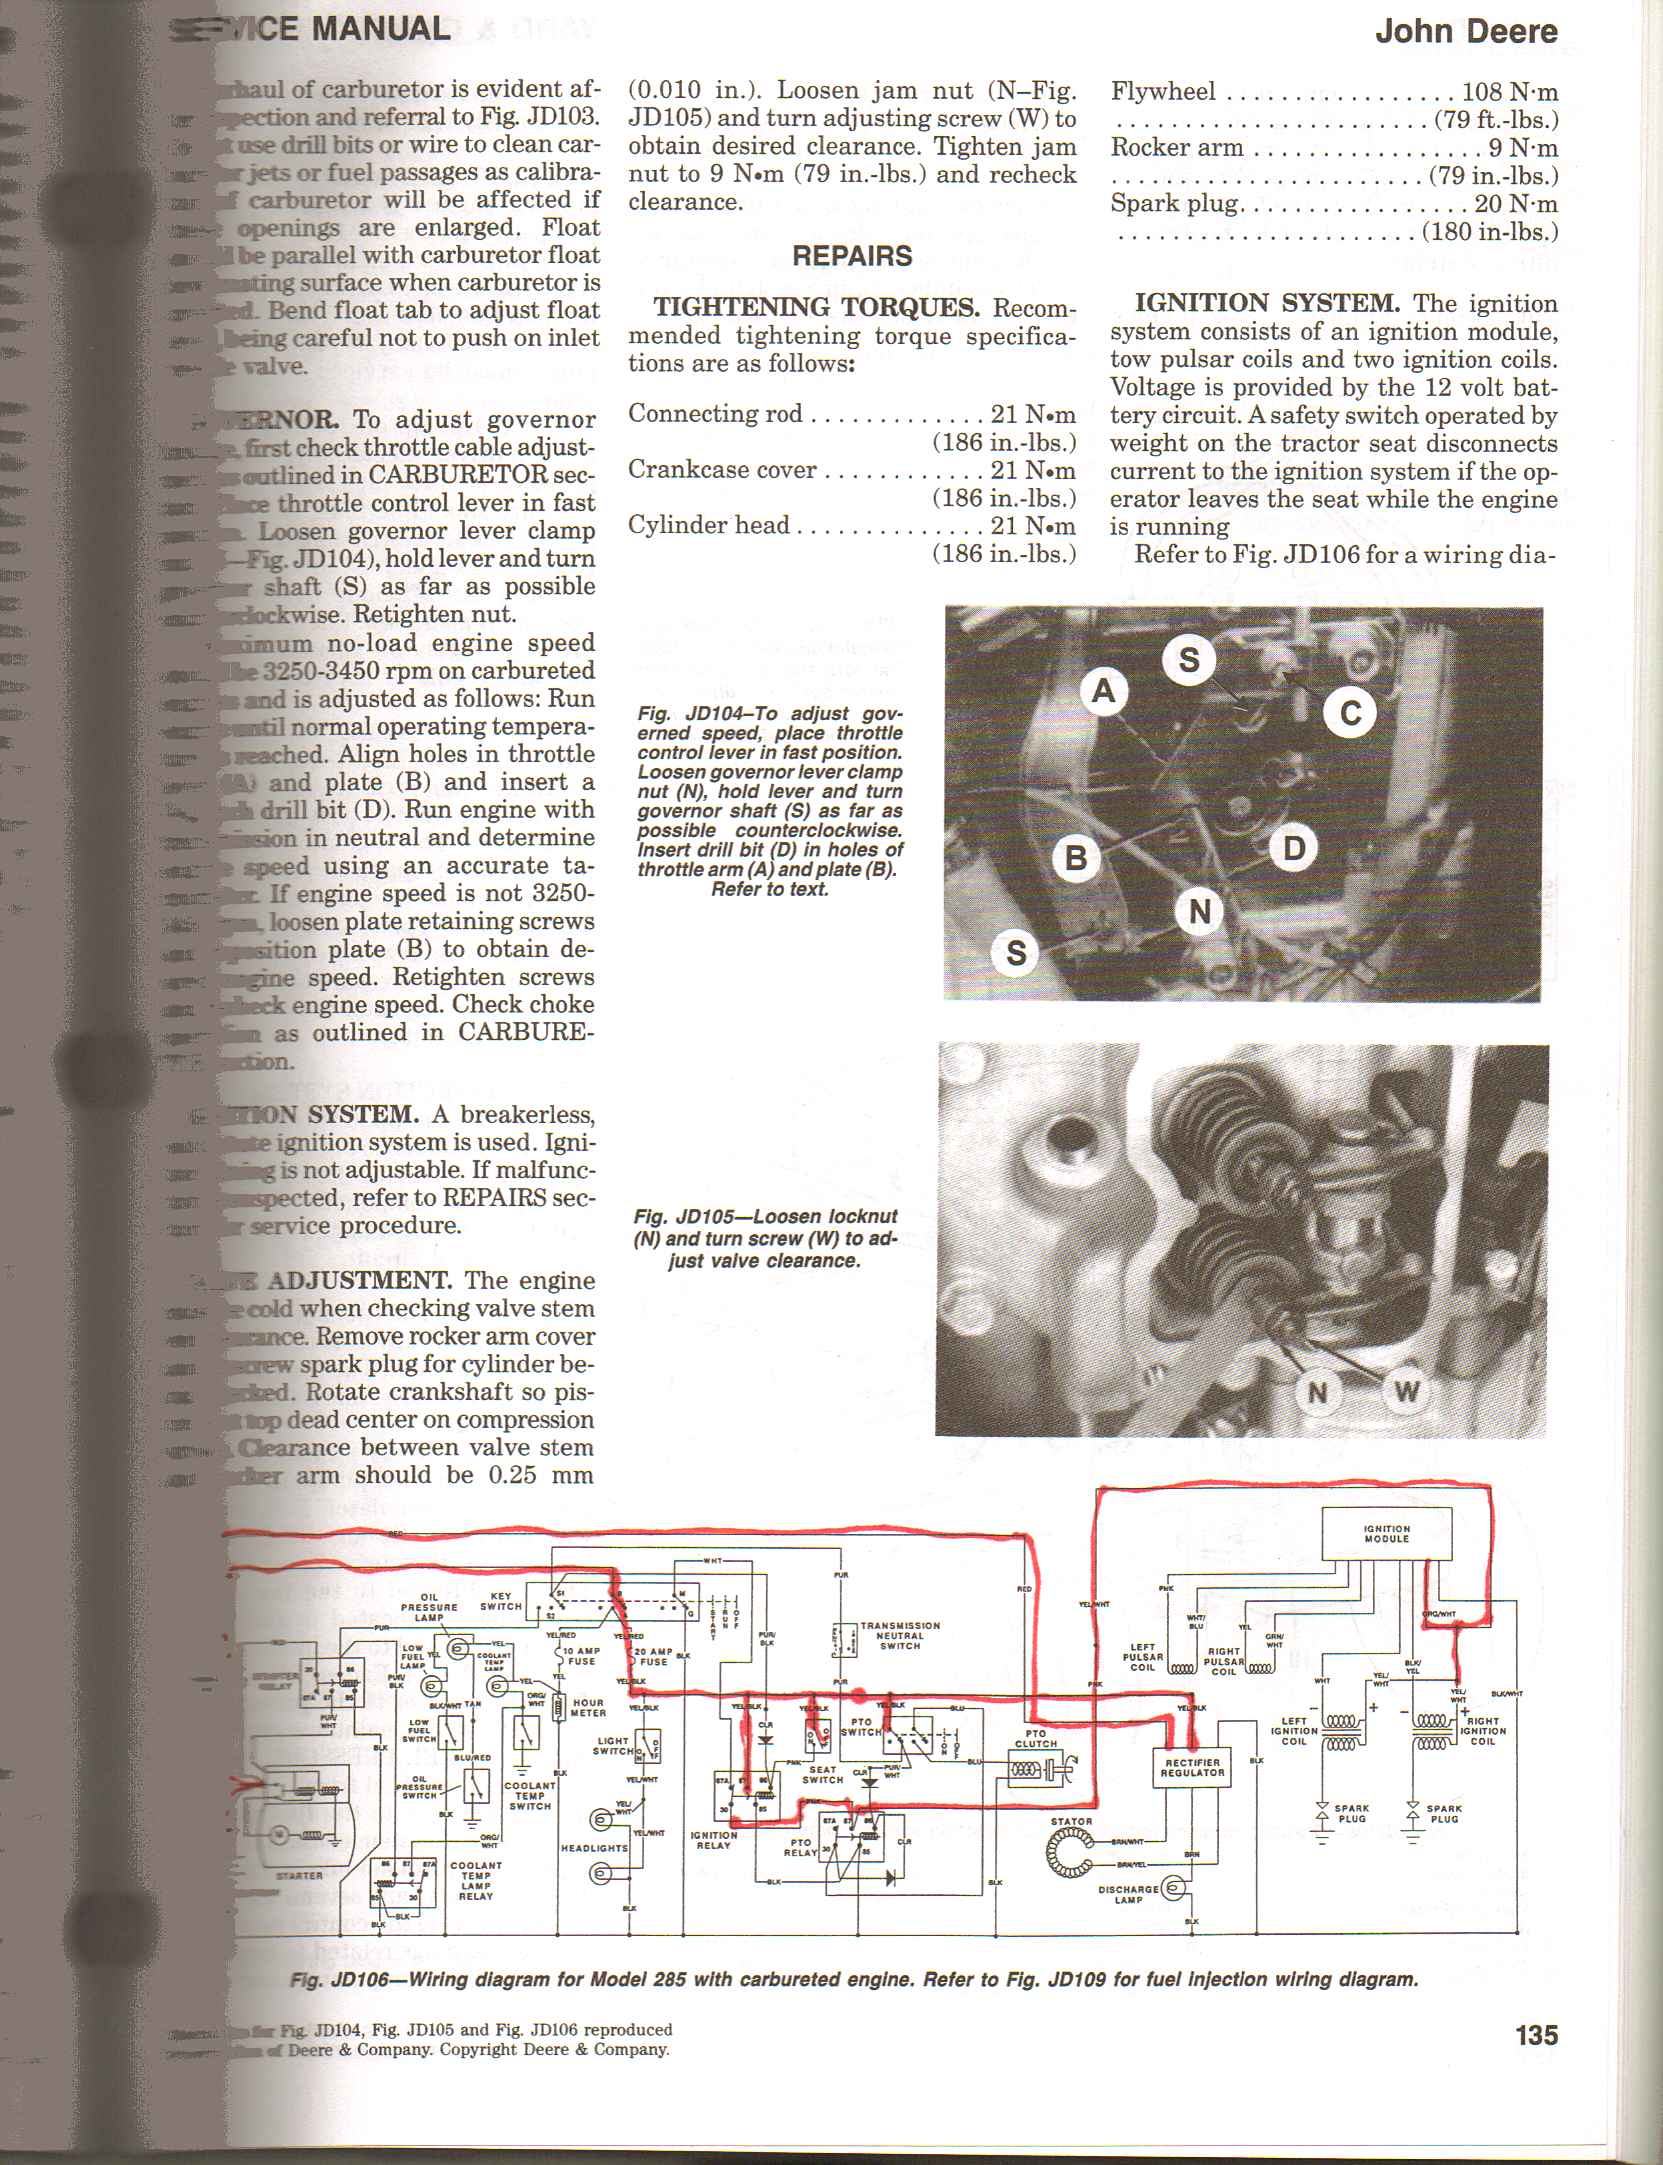 John Deere X300 Wiring Diagram